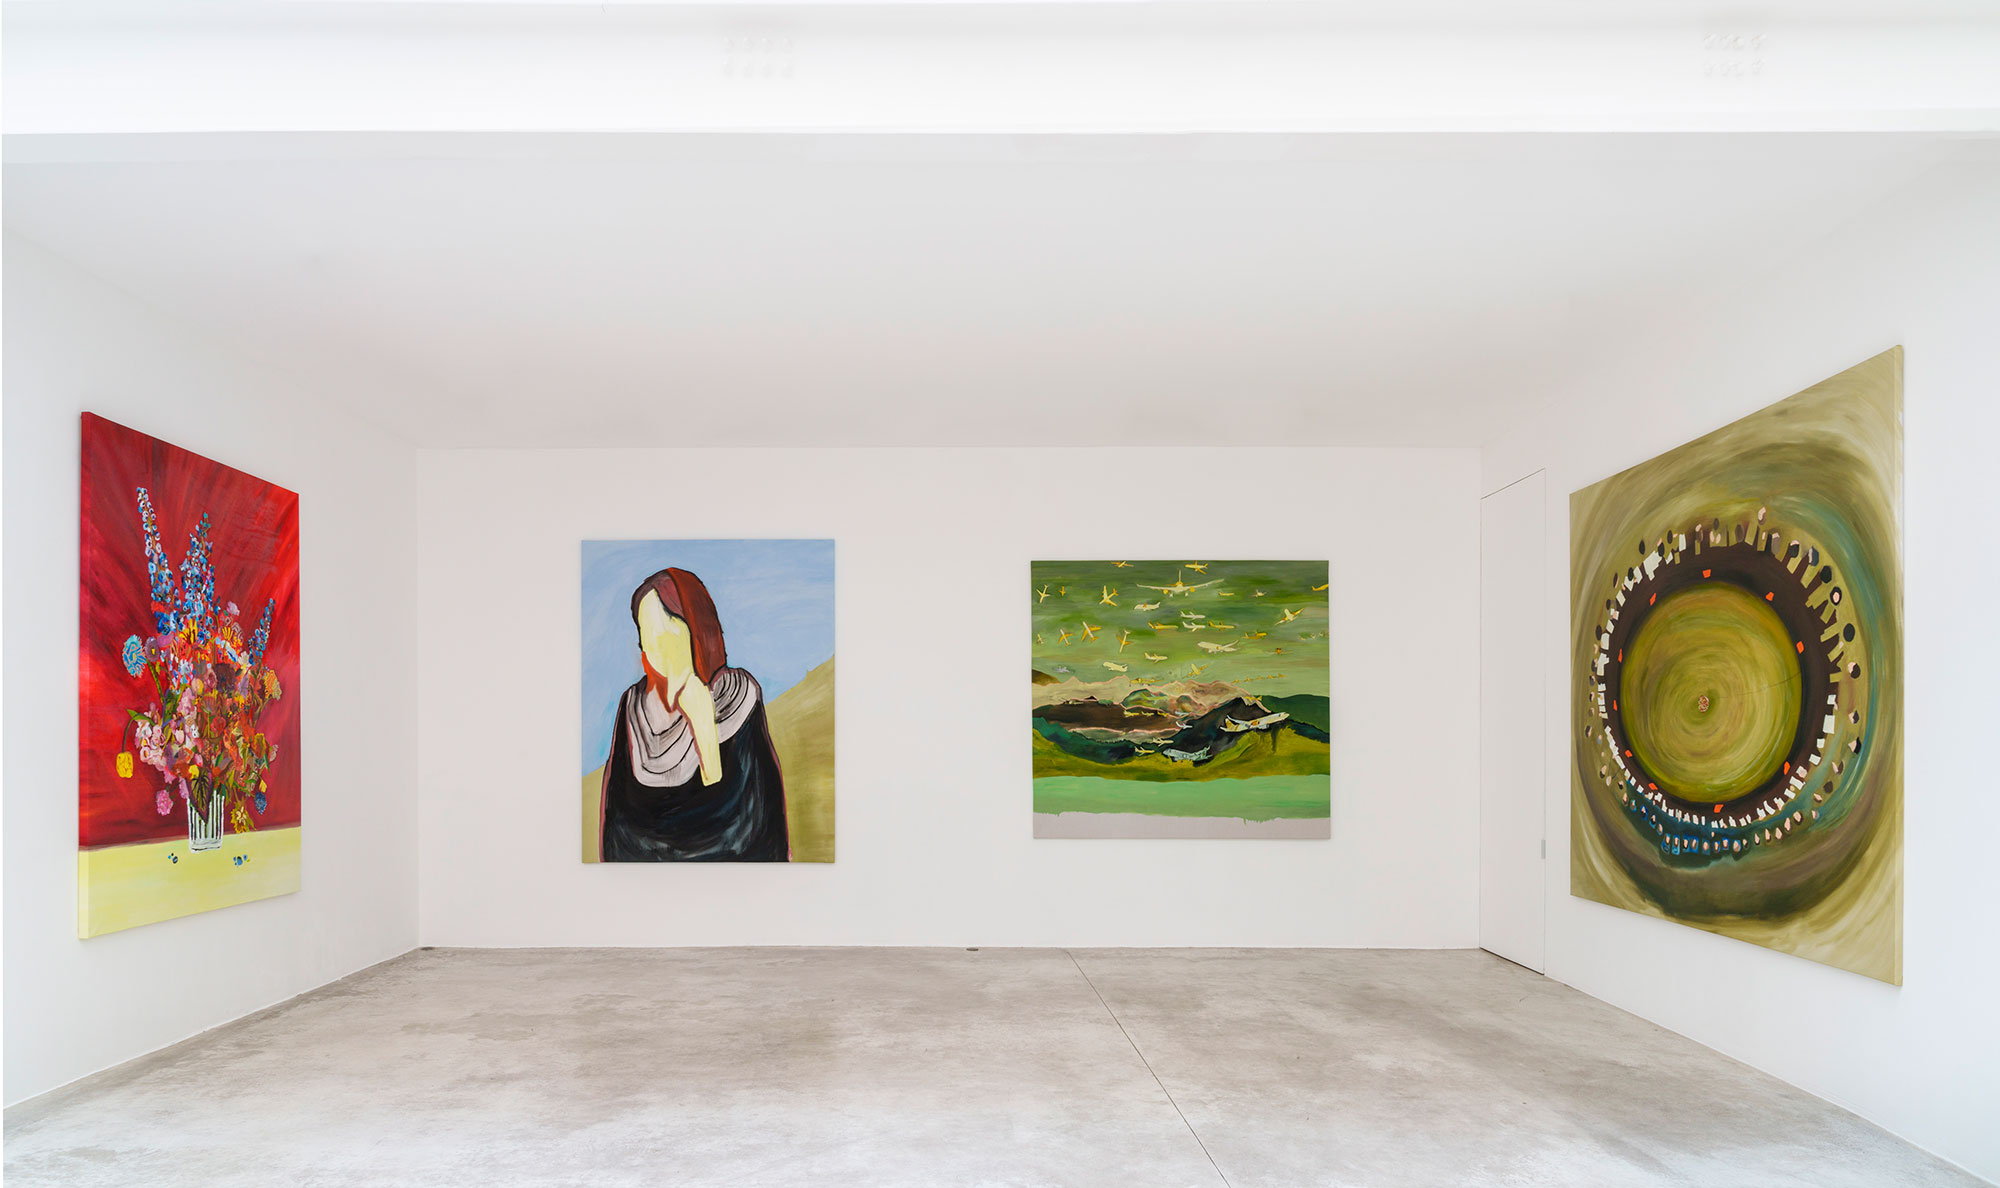 Paysages, Gallery Michel Rein, Paris